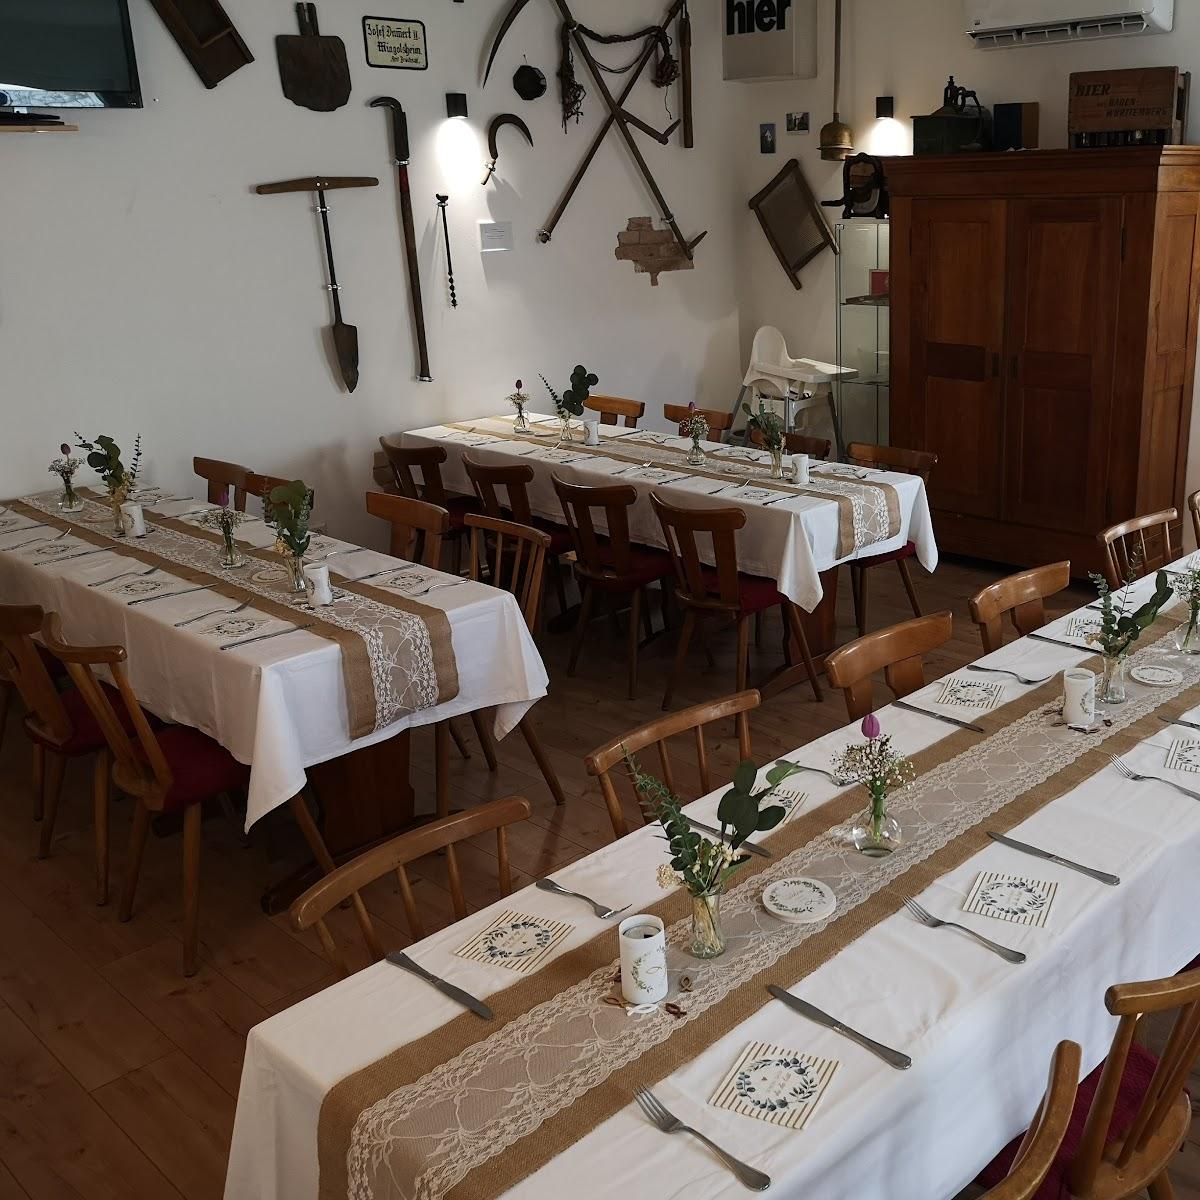 Restaurant "Alt Mengelse" in Bad Schönborn